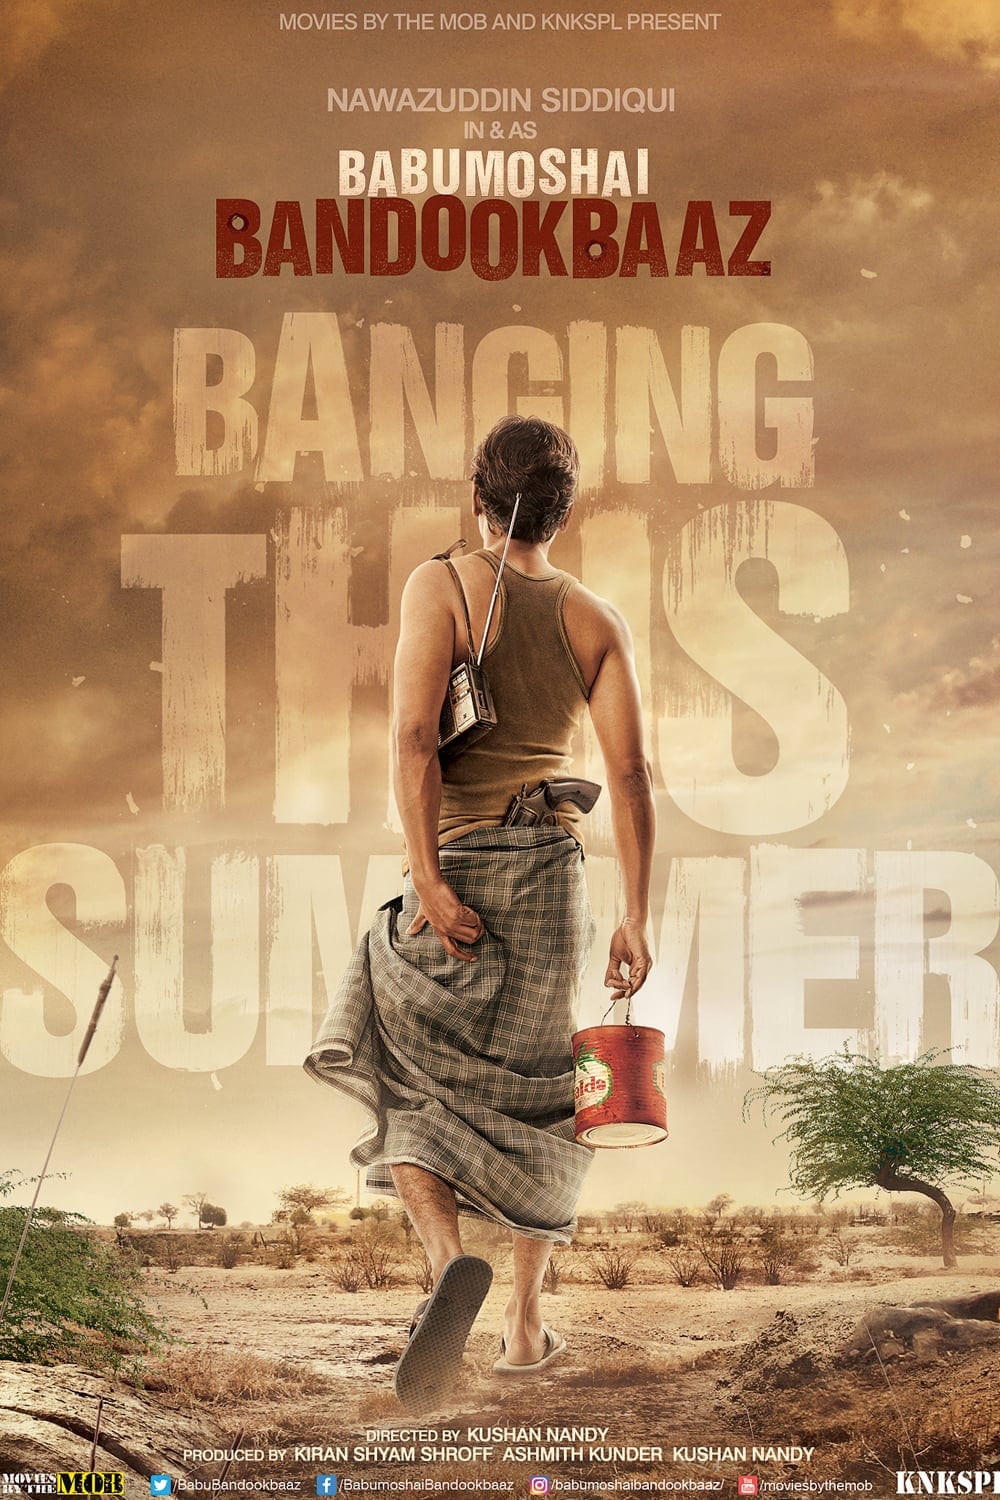 Poster for the movie "Babumoshai Bandookbaaz"